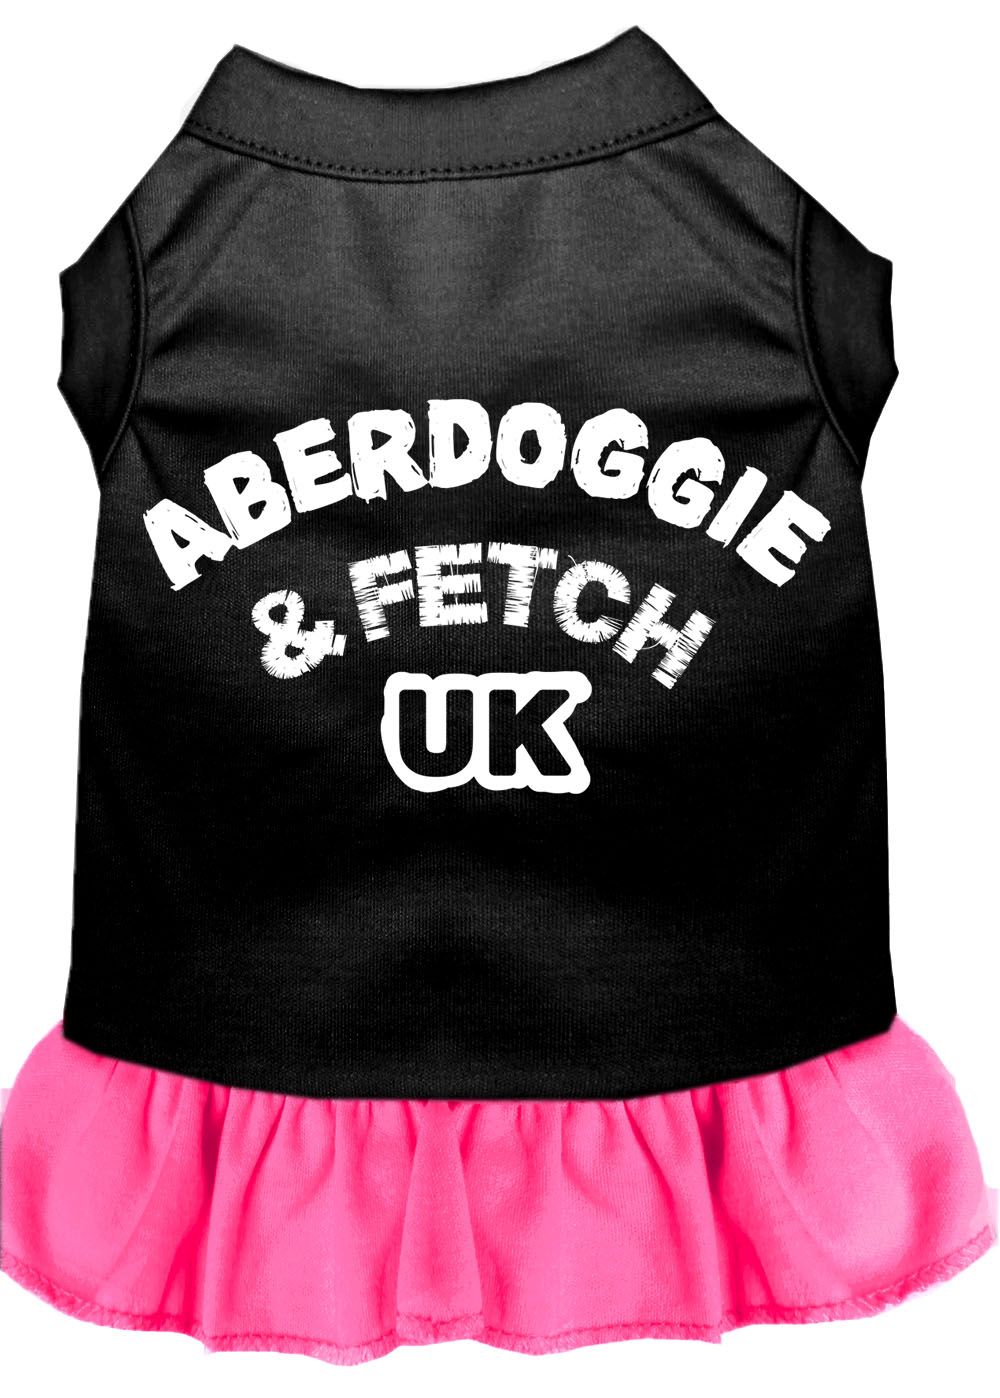 Aberdoggie Uk Screen Print Dress Black With Bright Pink Sm GreatEagleInc